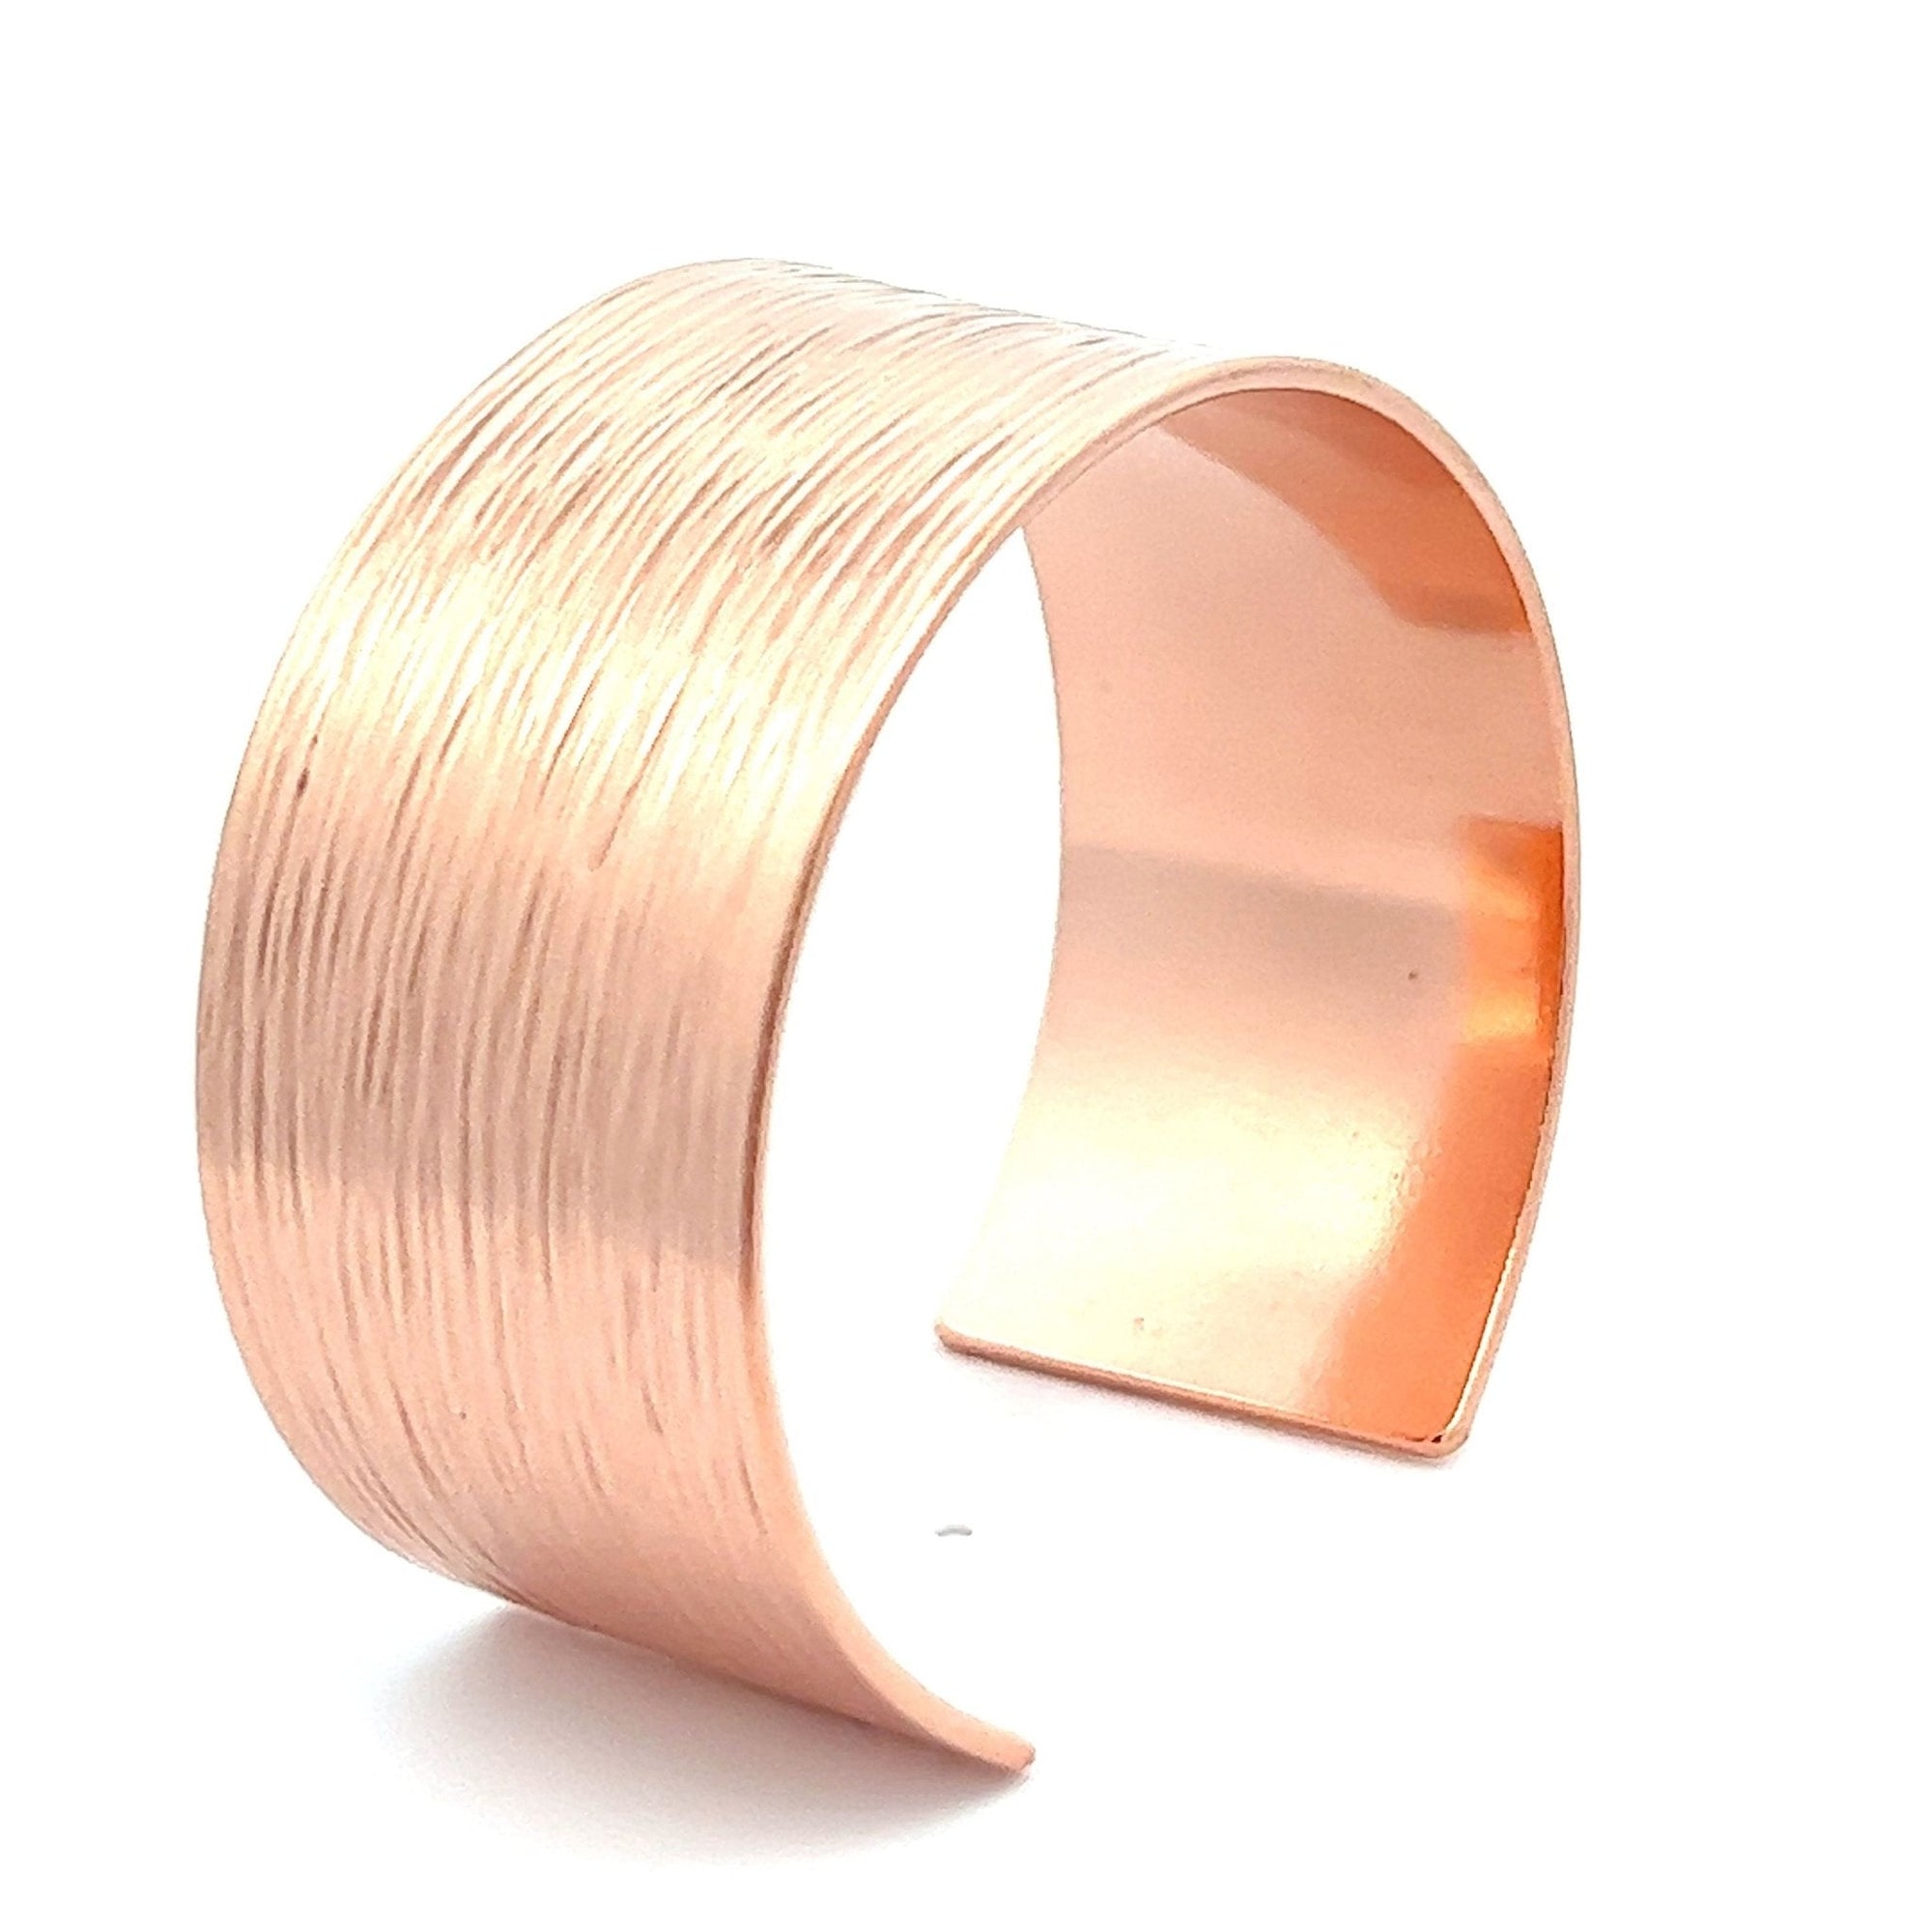 Men's Bark Copper Cuff Bracelet - 1 Inch Wide